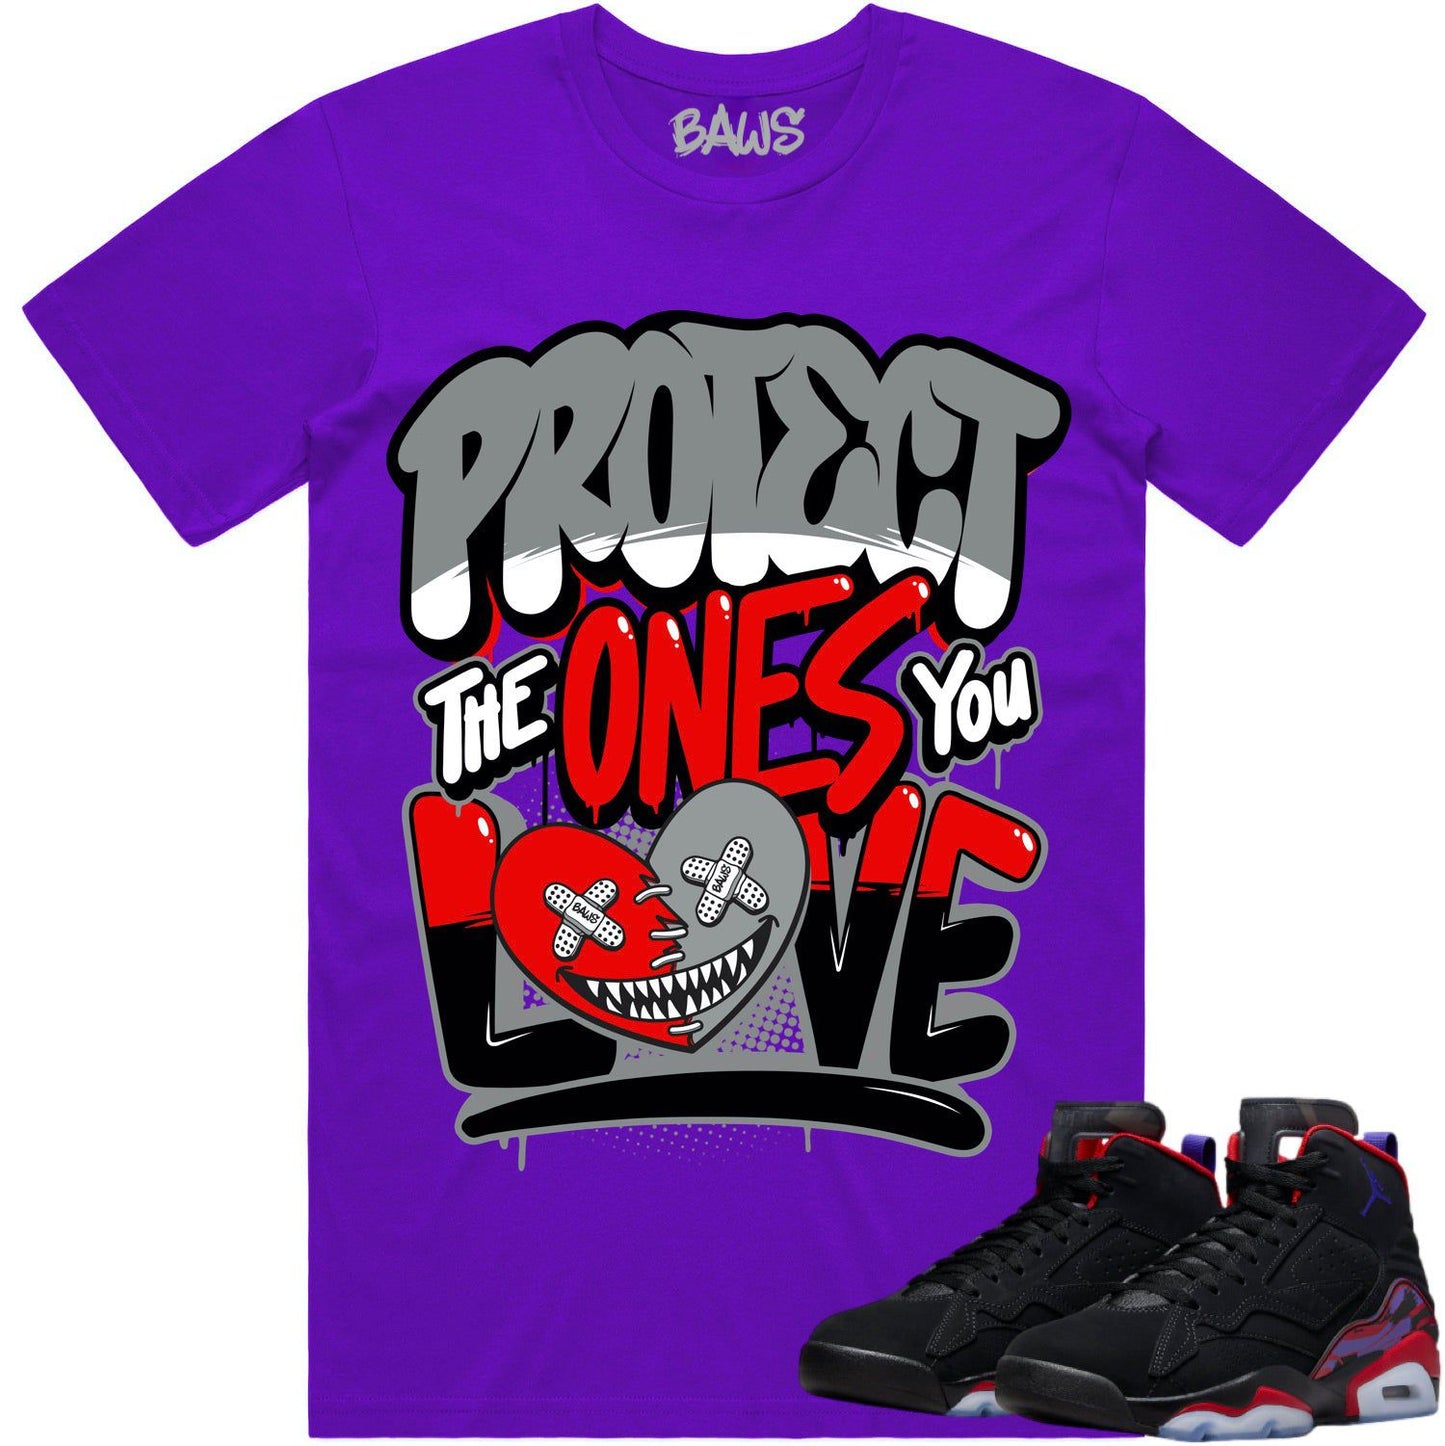 Jordan MVP Raptors Shirt - Sneaker Tees - Angry Money Talks Baws